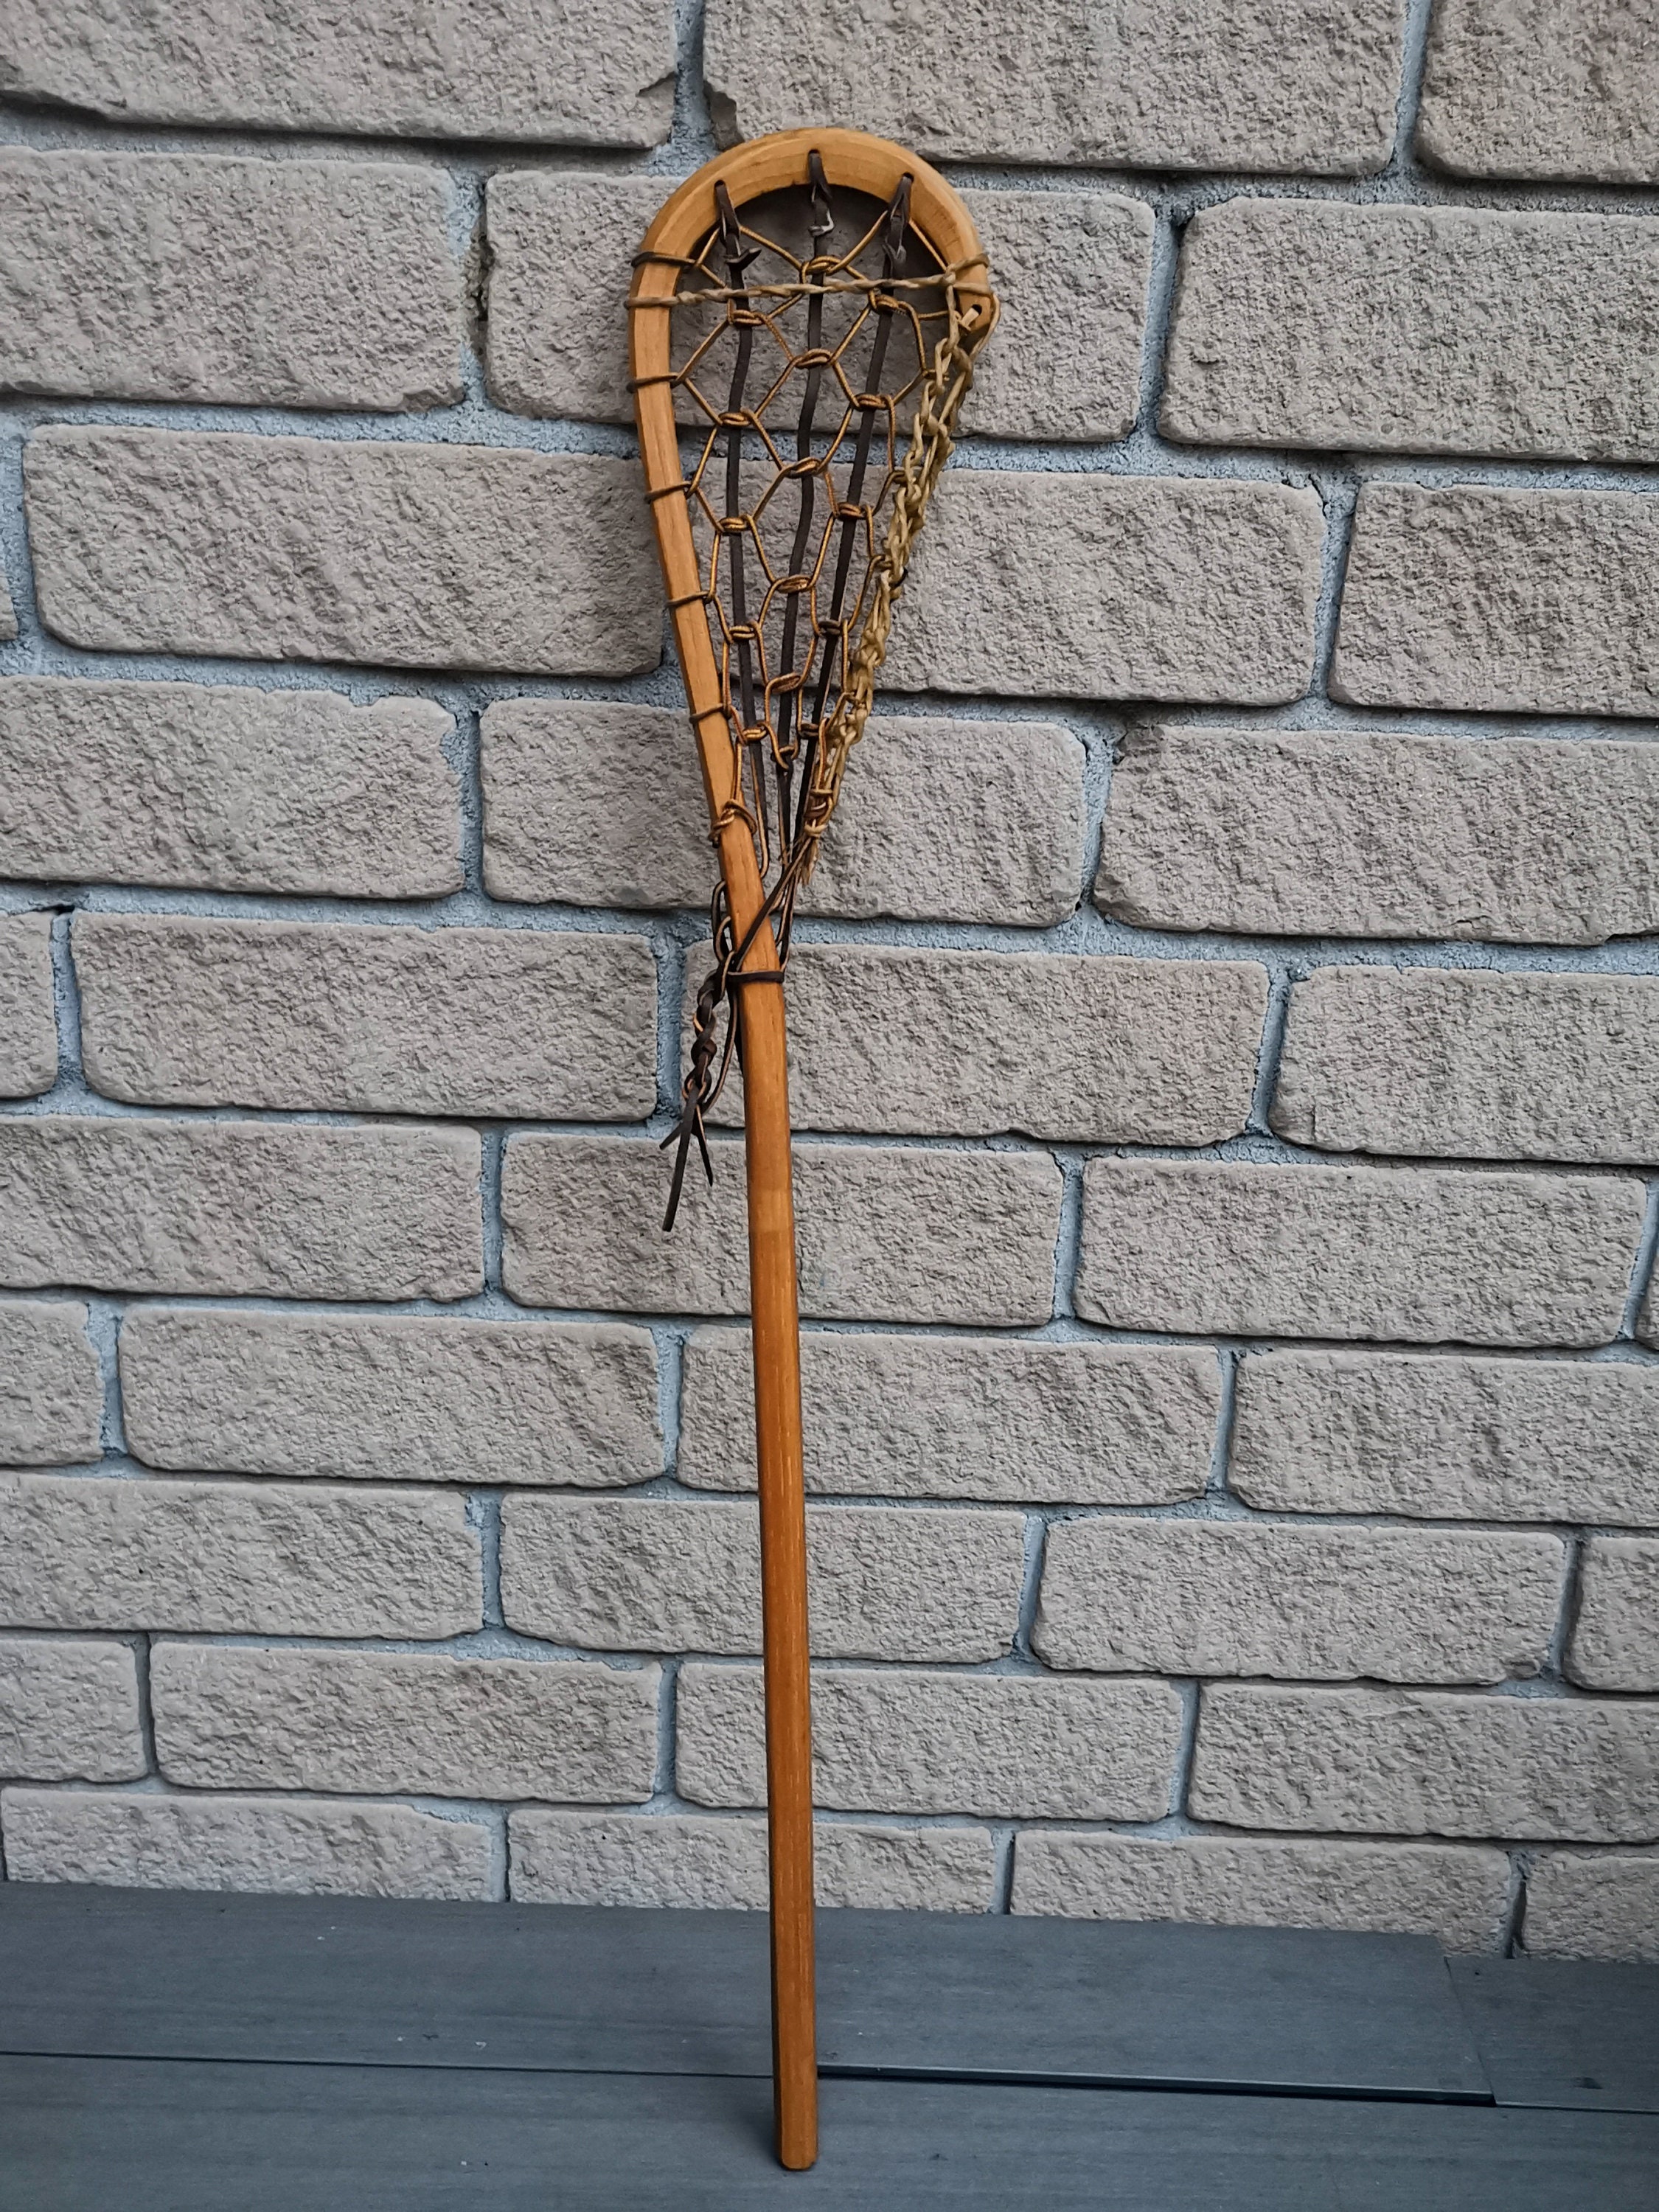 Traditional Lacrosse Stick Making - Saginaw Chippewa Indian Tribe